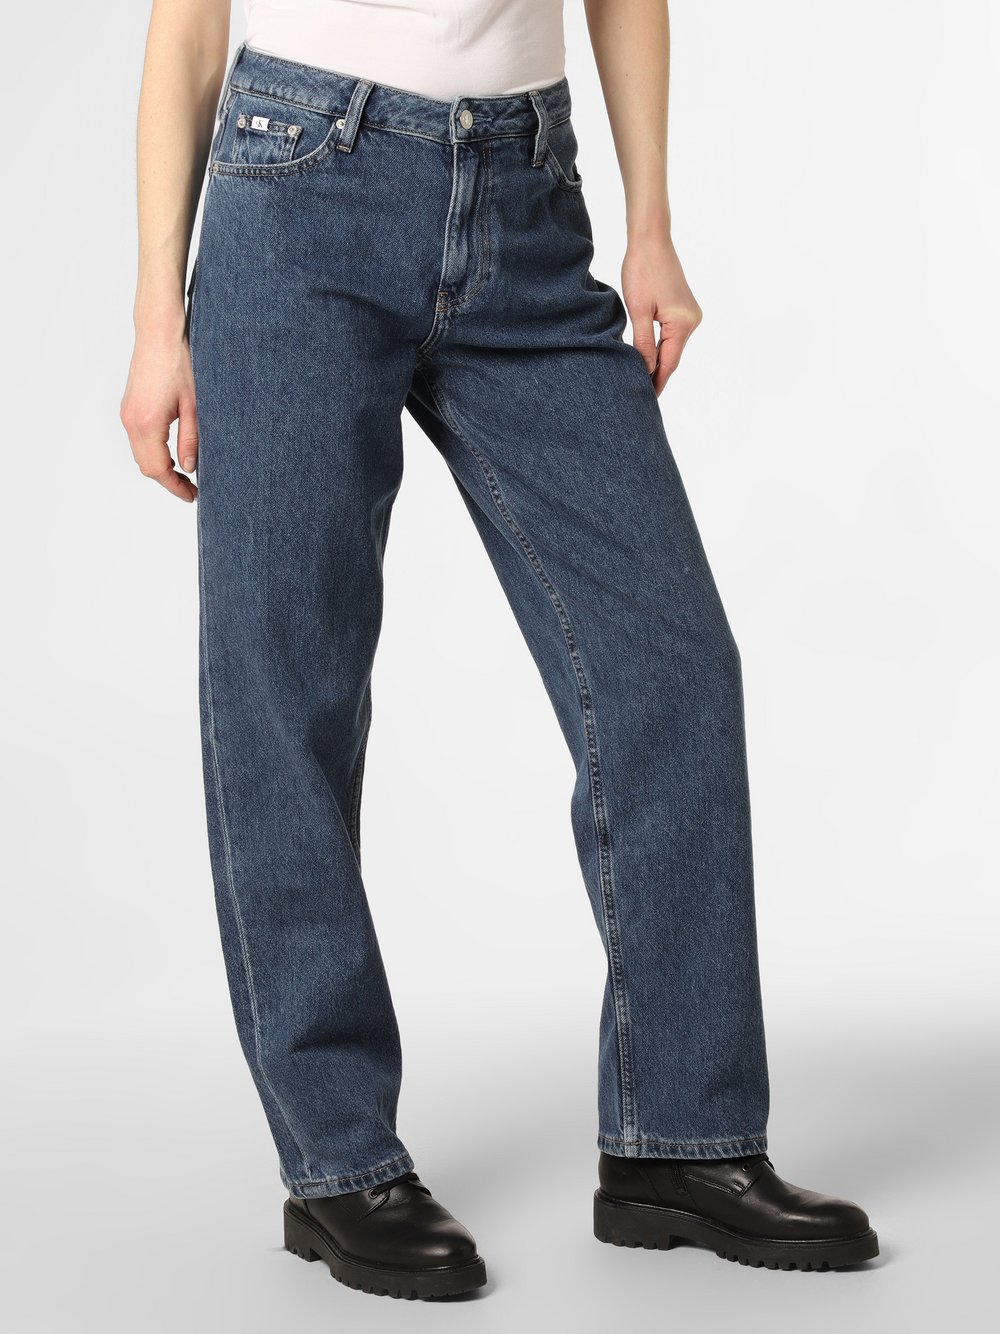 Calvin Klein Jeans - Jeansy damskie – 90s Straight, niebieski